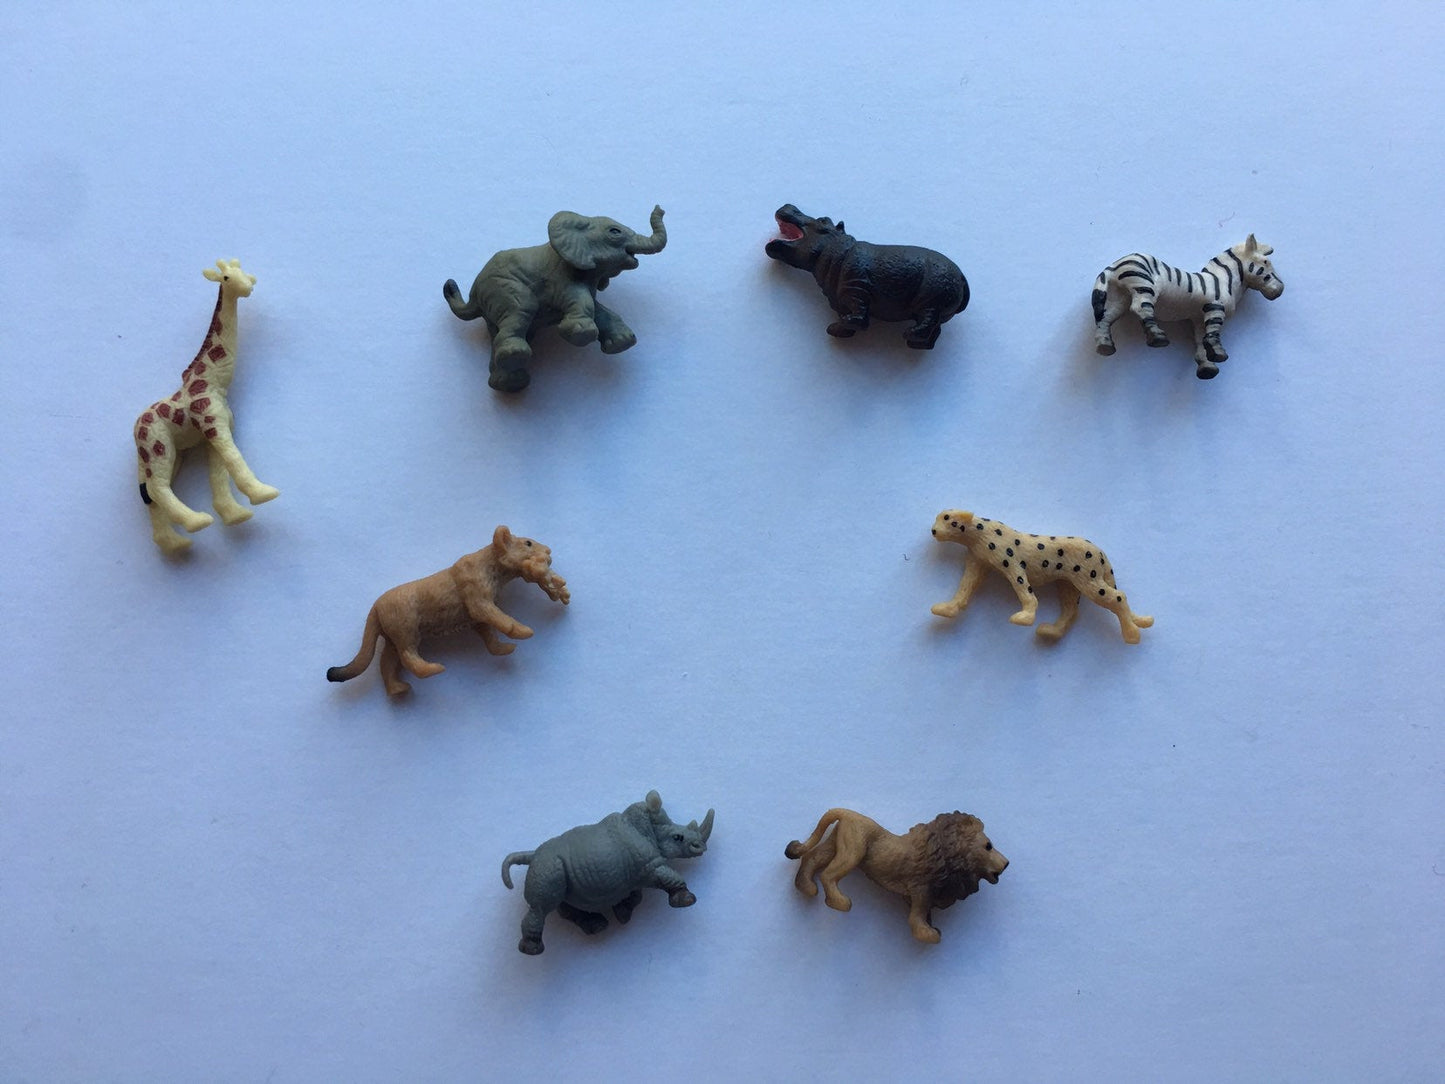 Travel Safari Miniature Felt Playmat with Safari Animal Toys